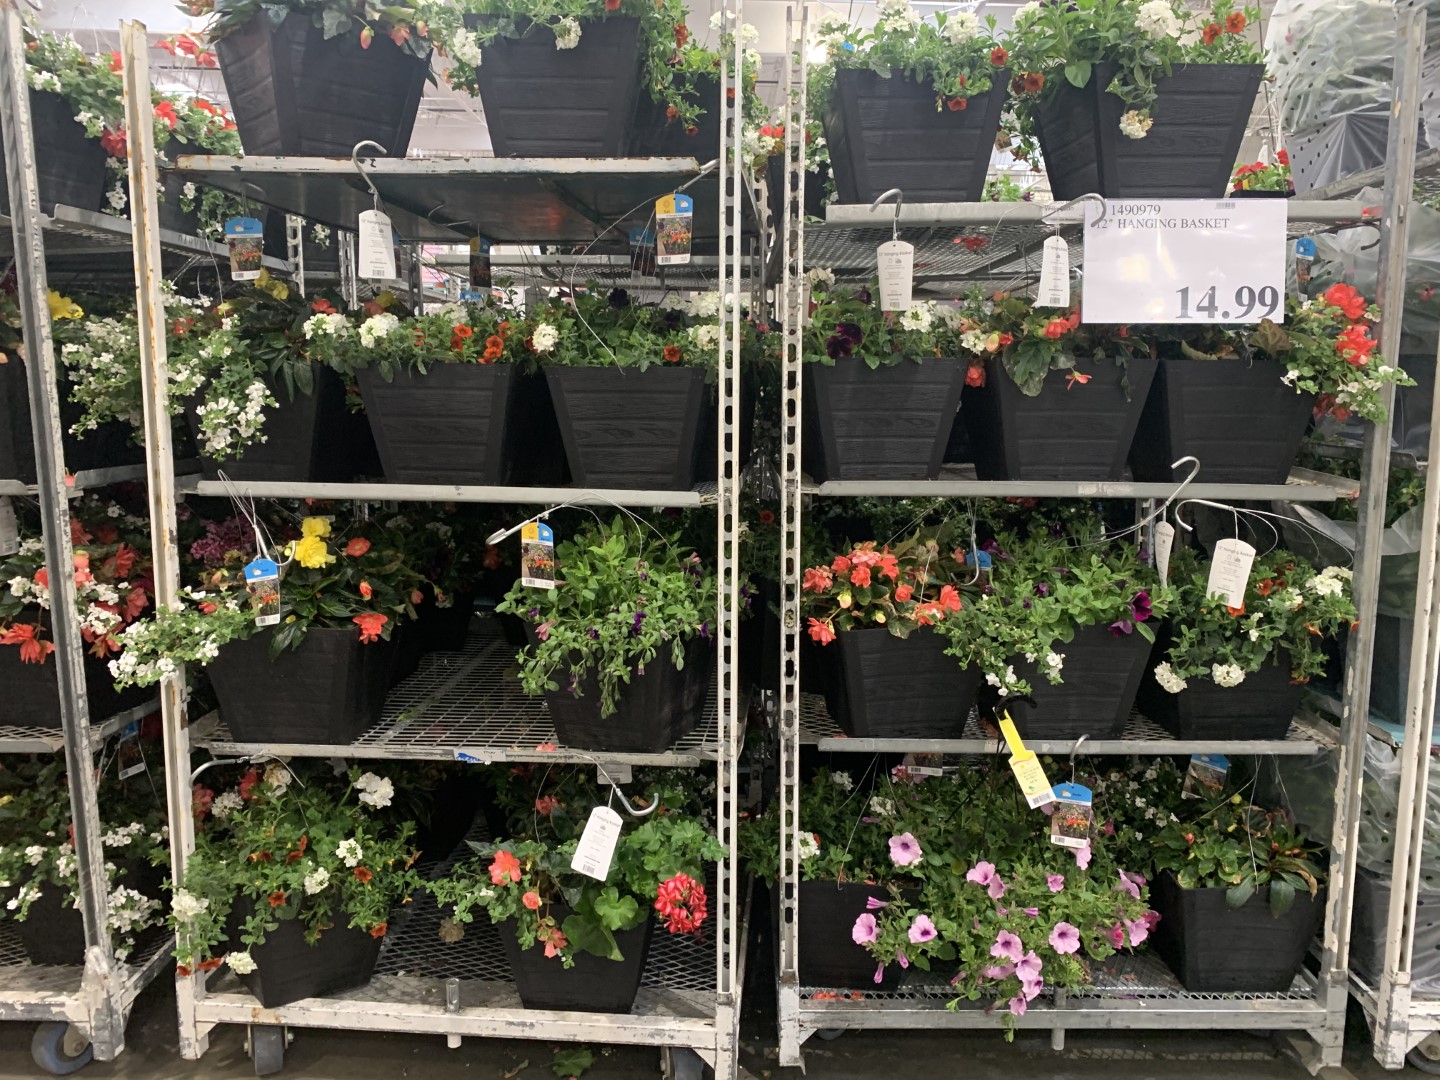 Costco Spring Aisle 2020 Superpost! Home, Garden & Plants - Costco West